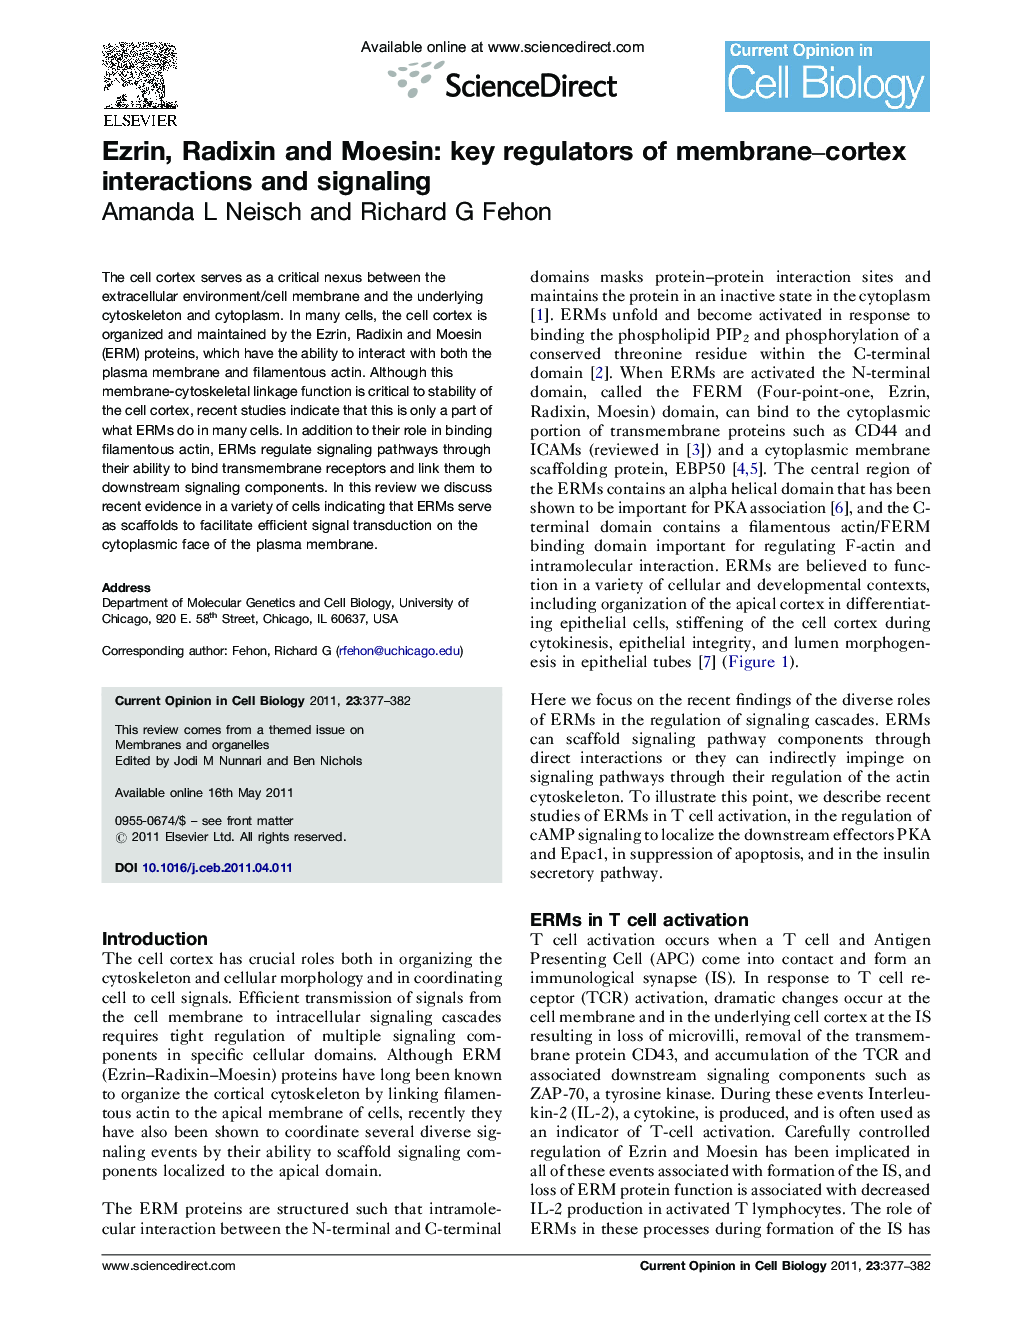 Ezrin, Radixin and Moesin: key regulators of membrane–cortex interactions and signaling